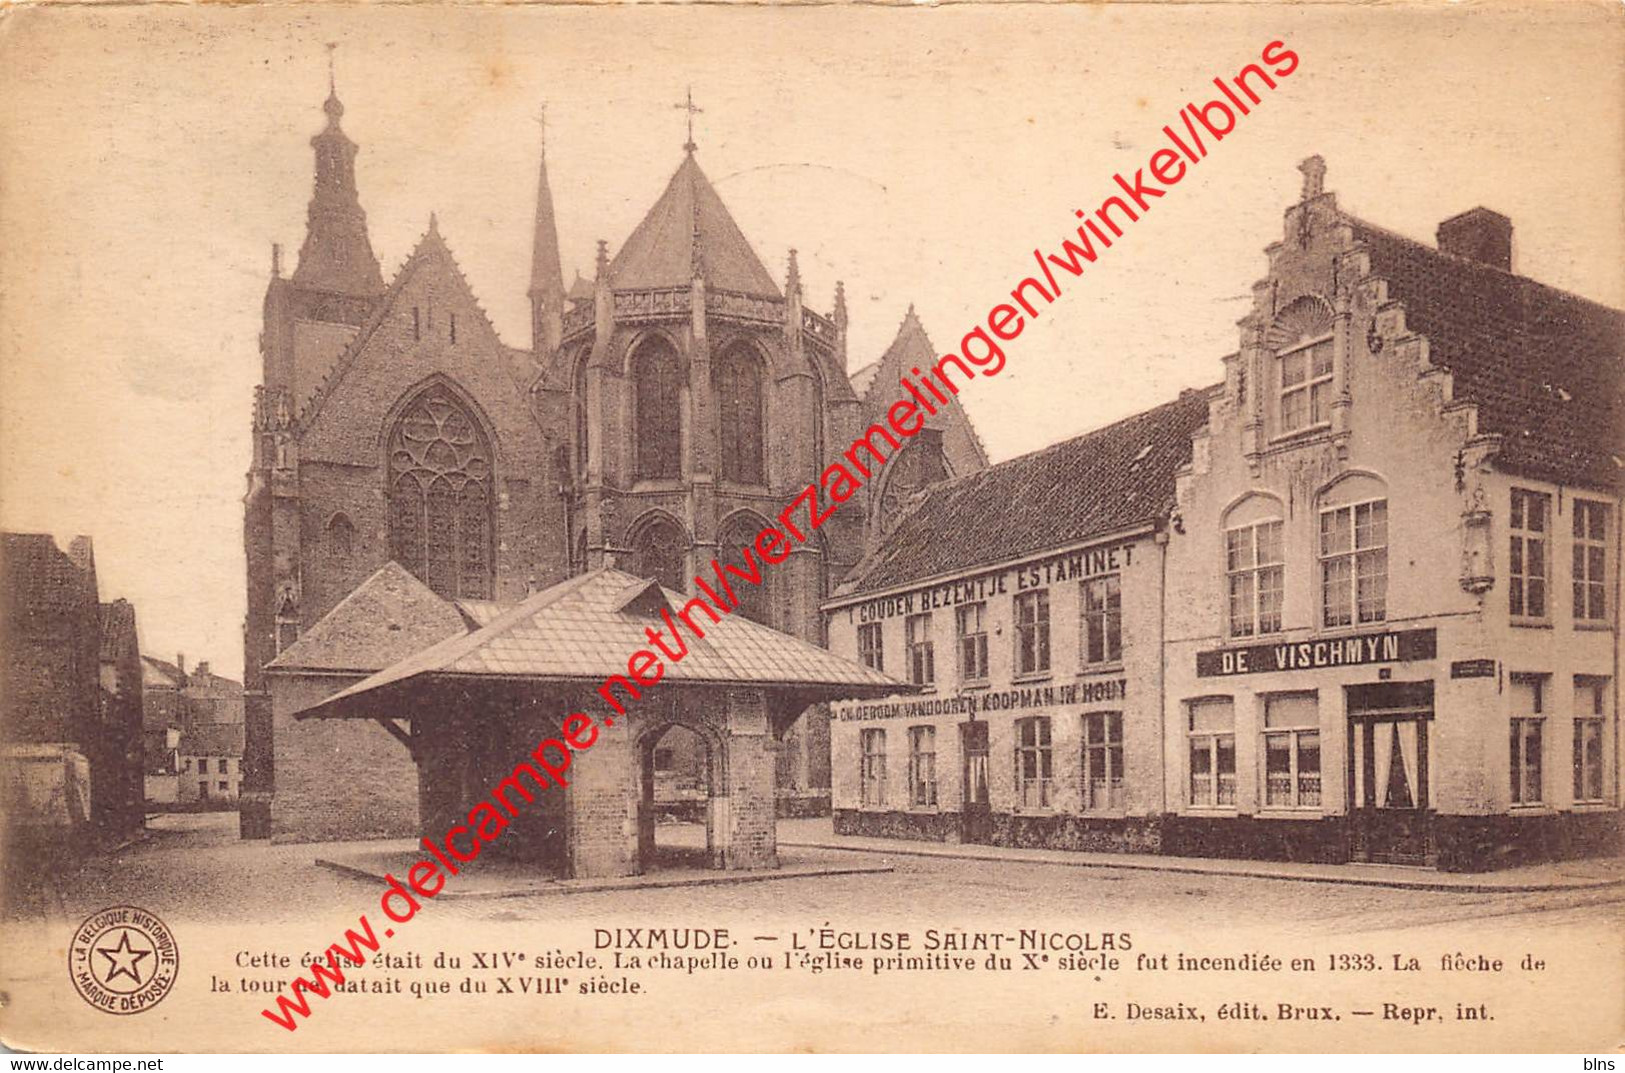 Dixmude - L'église Saint-Nicolas - Estaminet 't Gouden Bezemtje - De Vischmyn - Diksmuide - Diksmuide